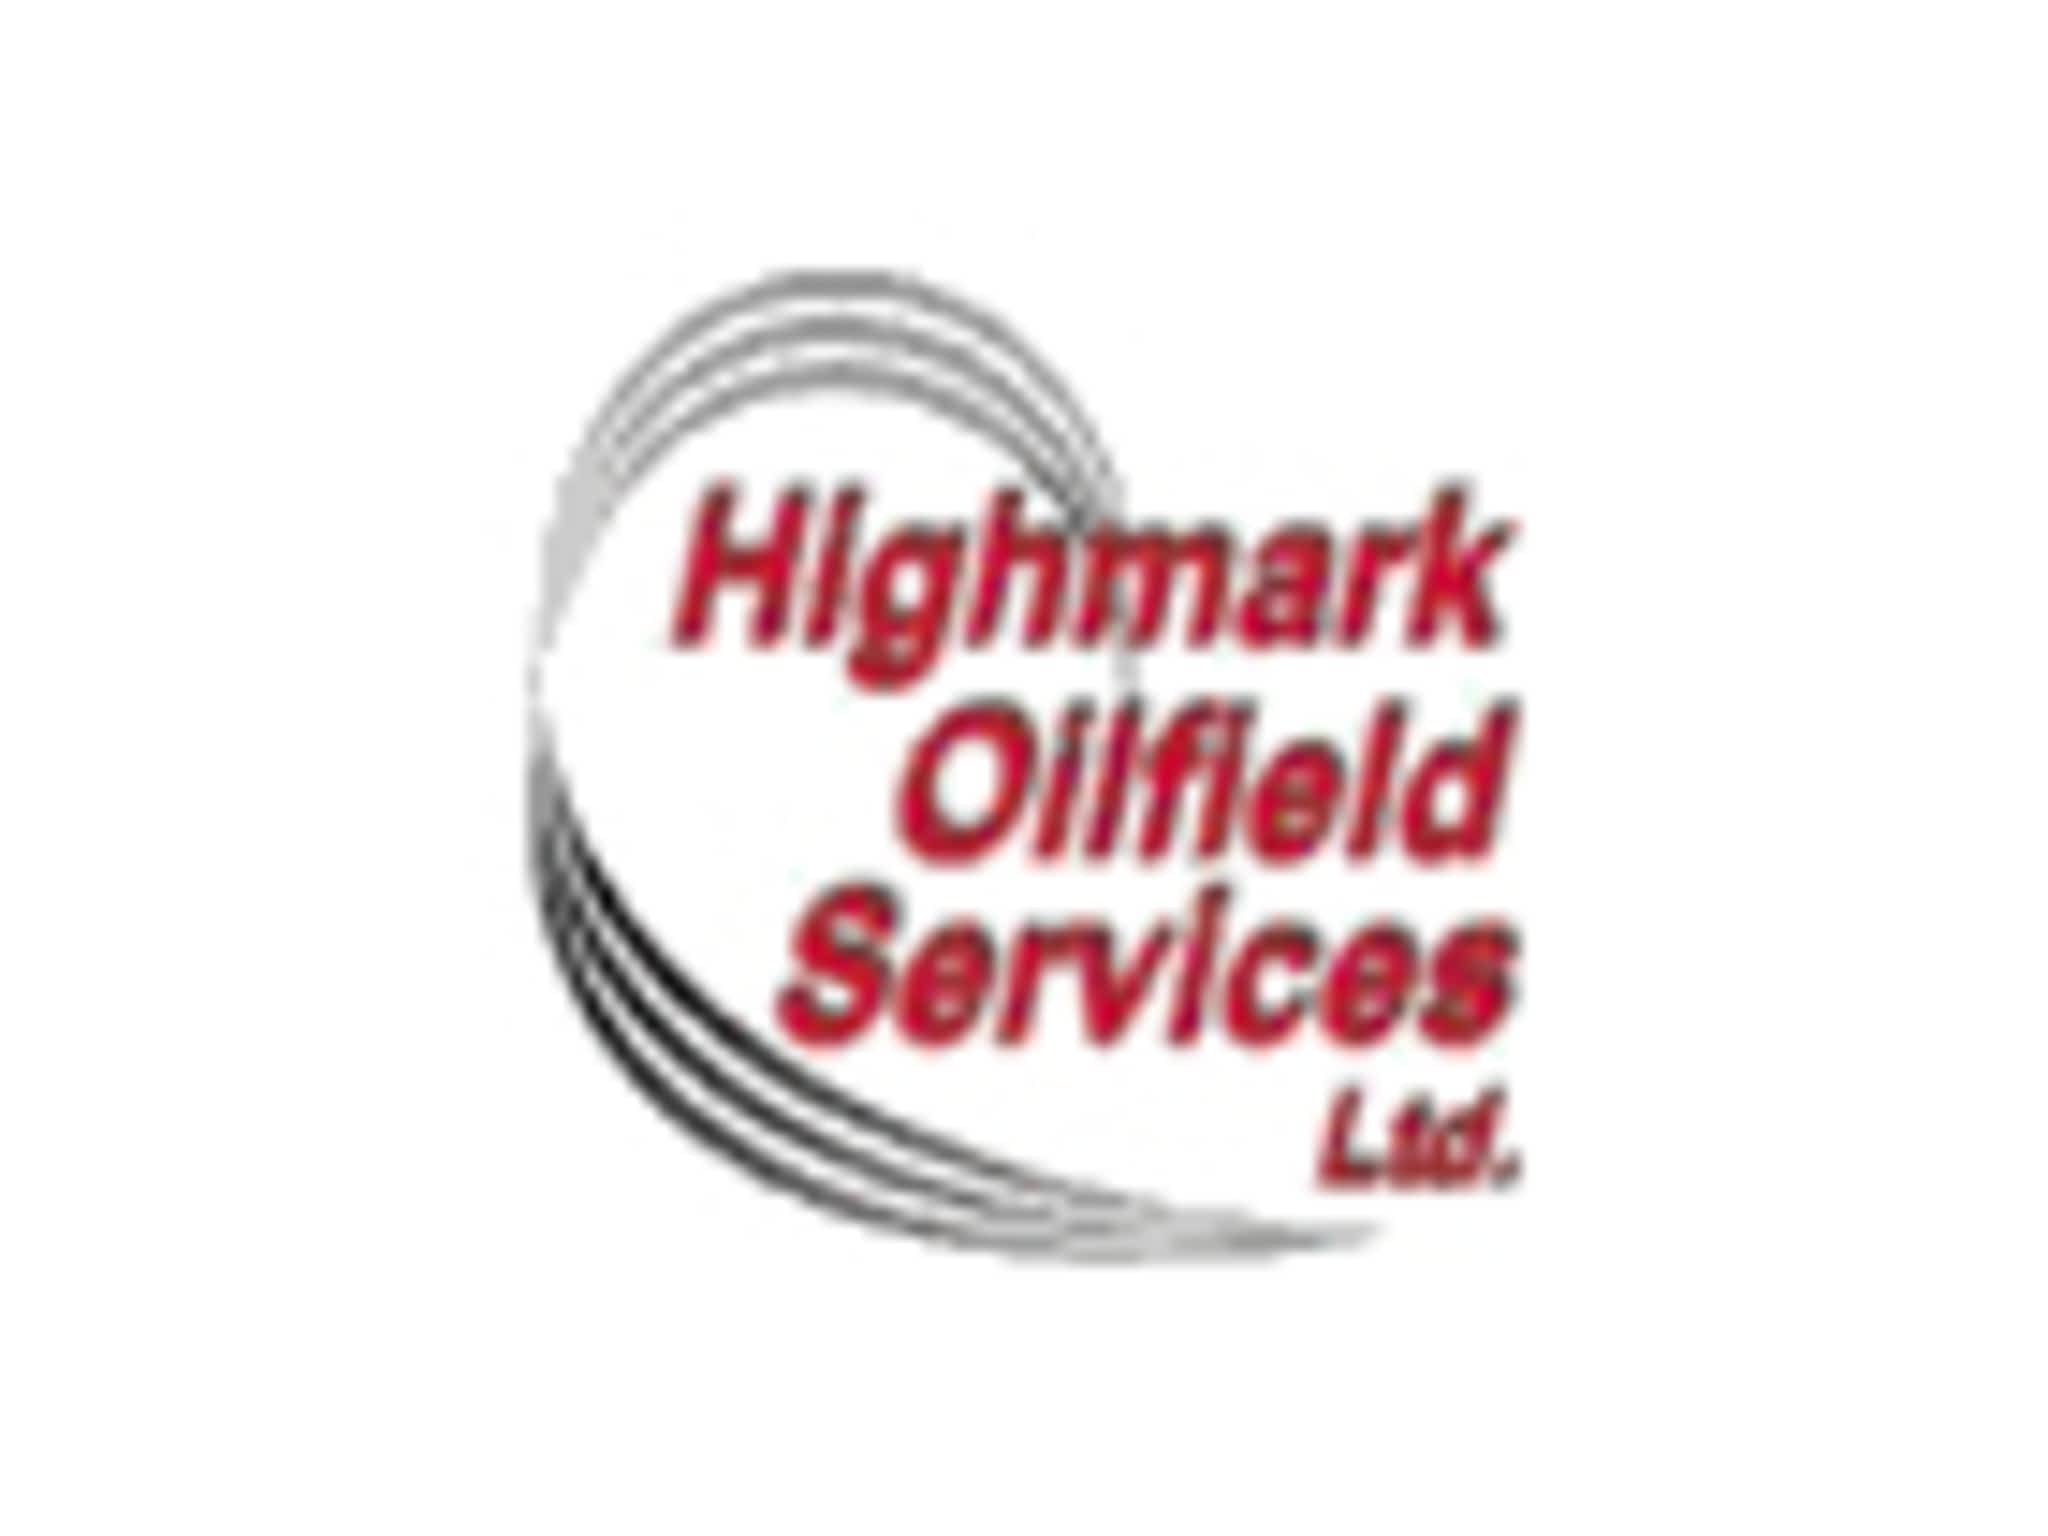 photo Highmark Oilfield Services Ltd